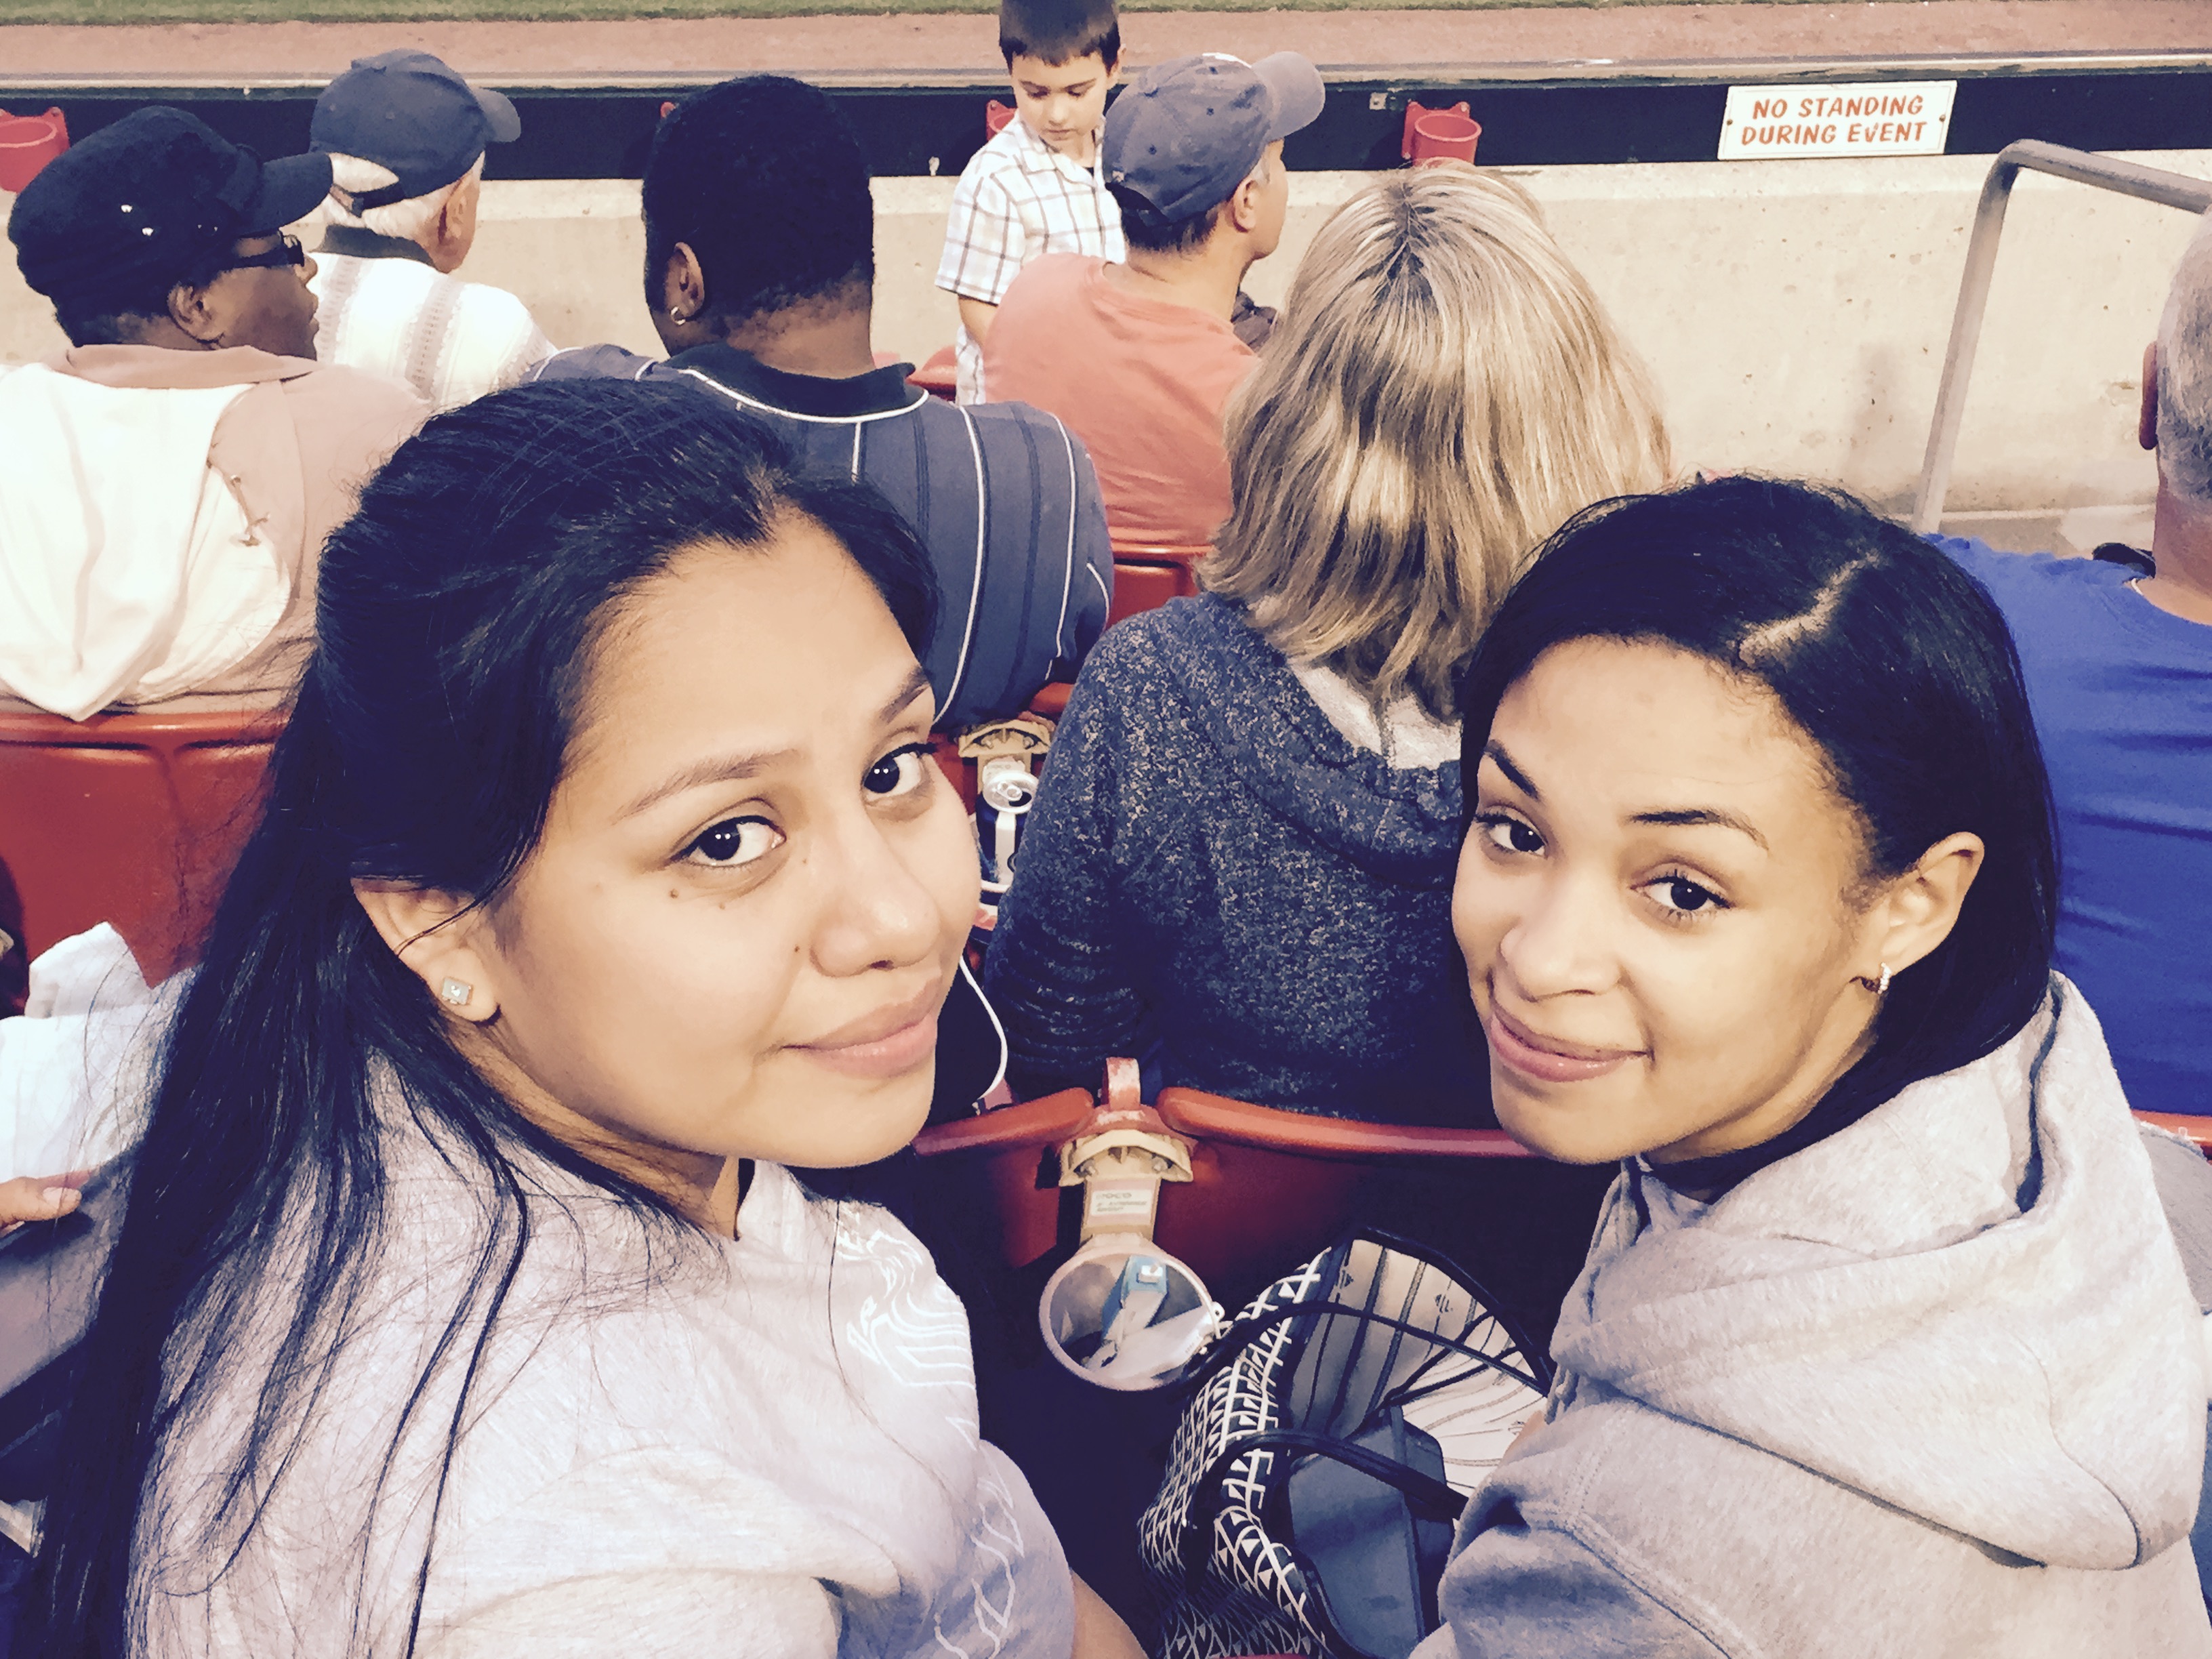 Esme and Kim enjoying the Bisons baseball game in downtown Buffalo.